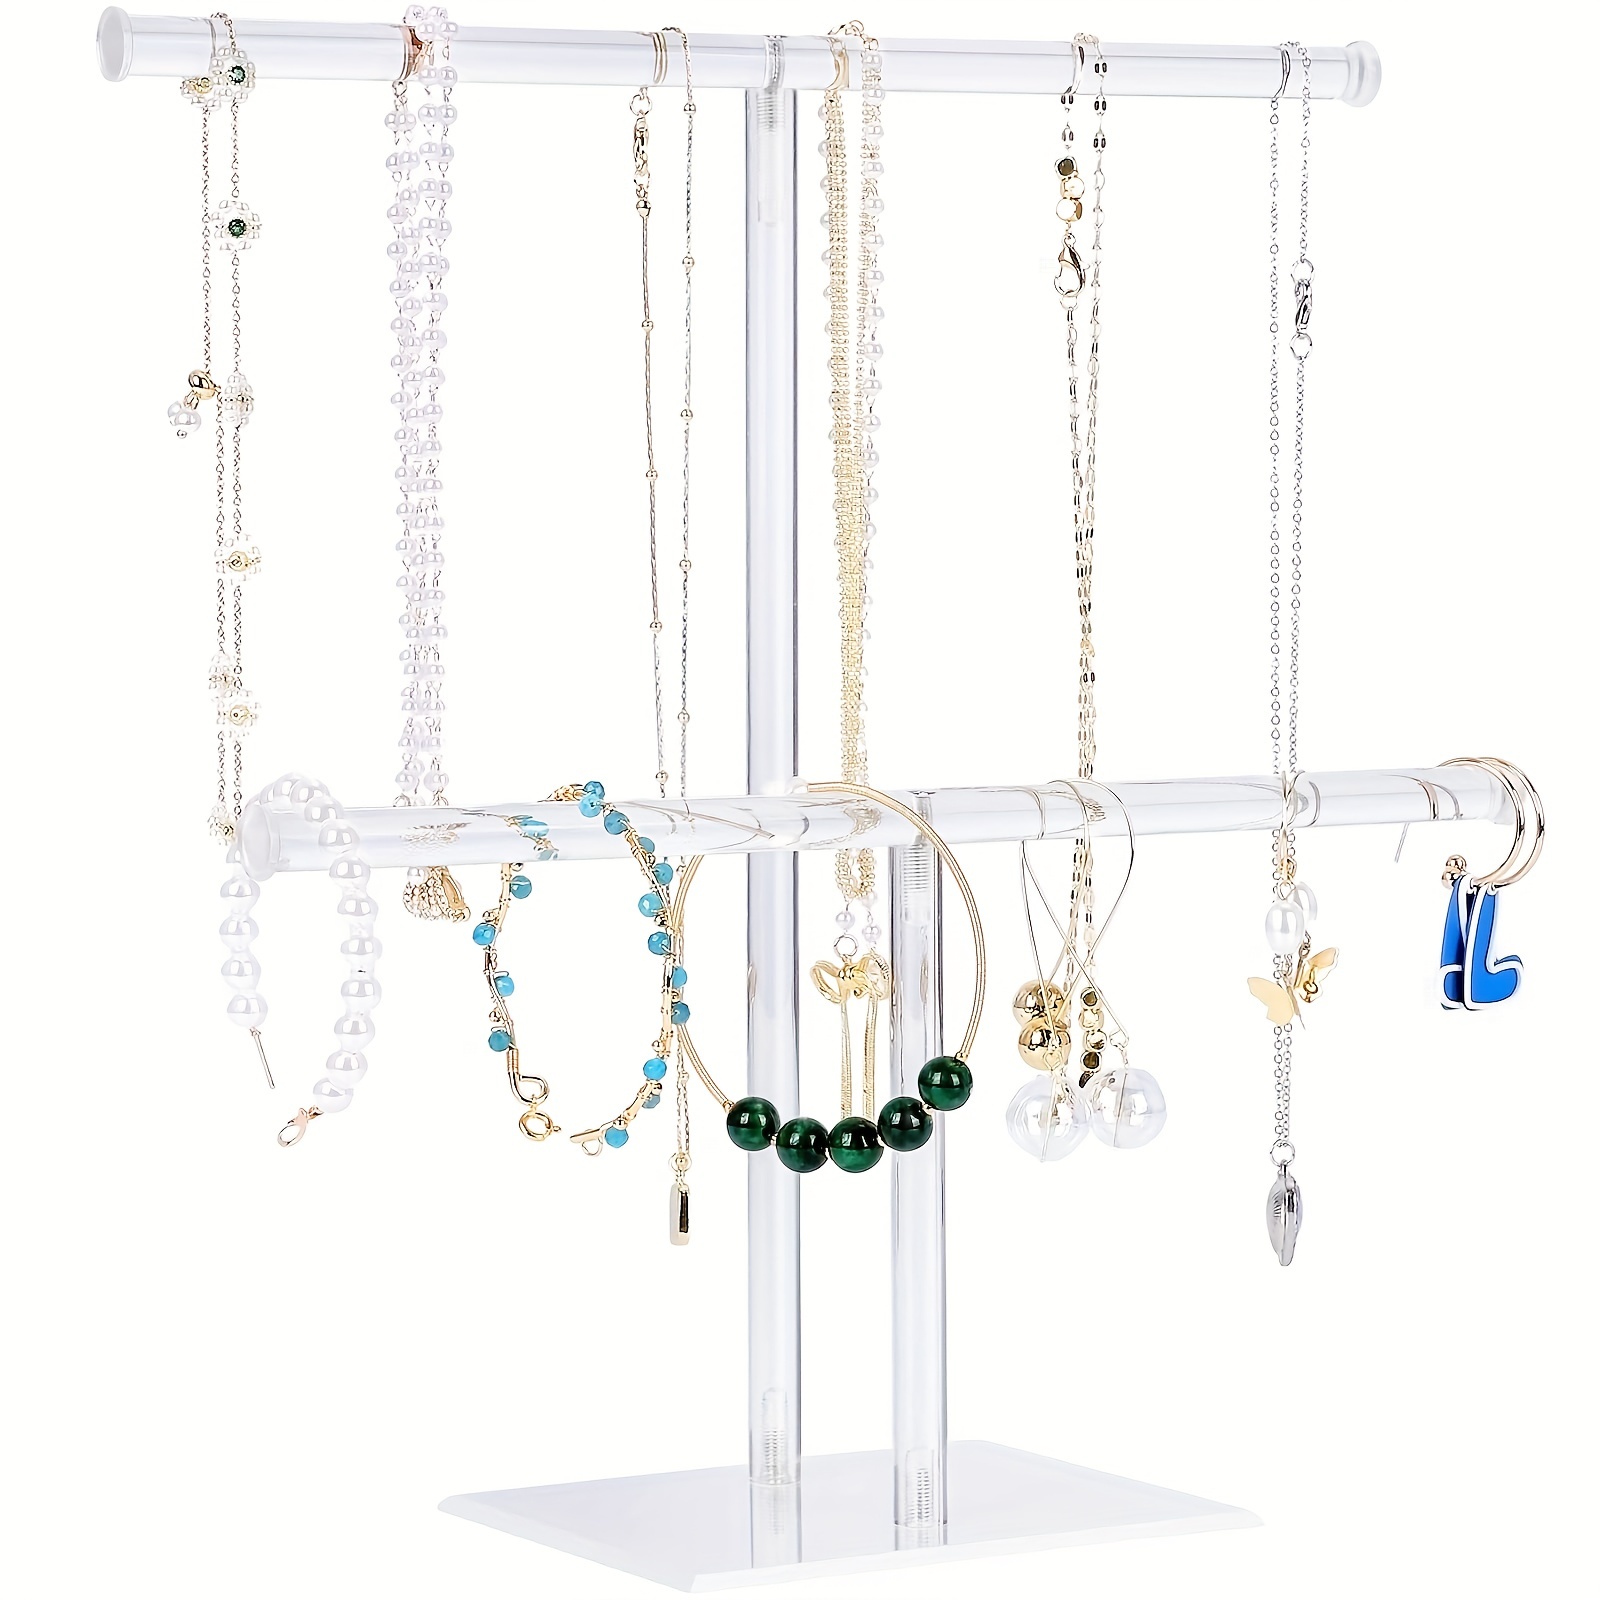 Soporte de joyería de 3 niveles para collares, aretes, pulseras,  organizador de joyas escalonado con bandeja para anillos, soporte colgante  para árbol